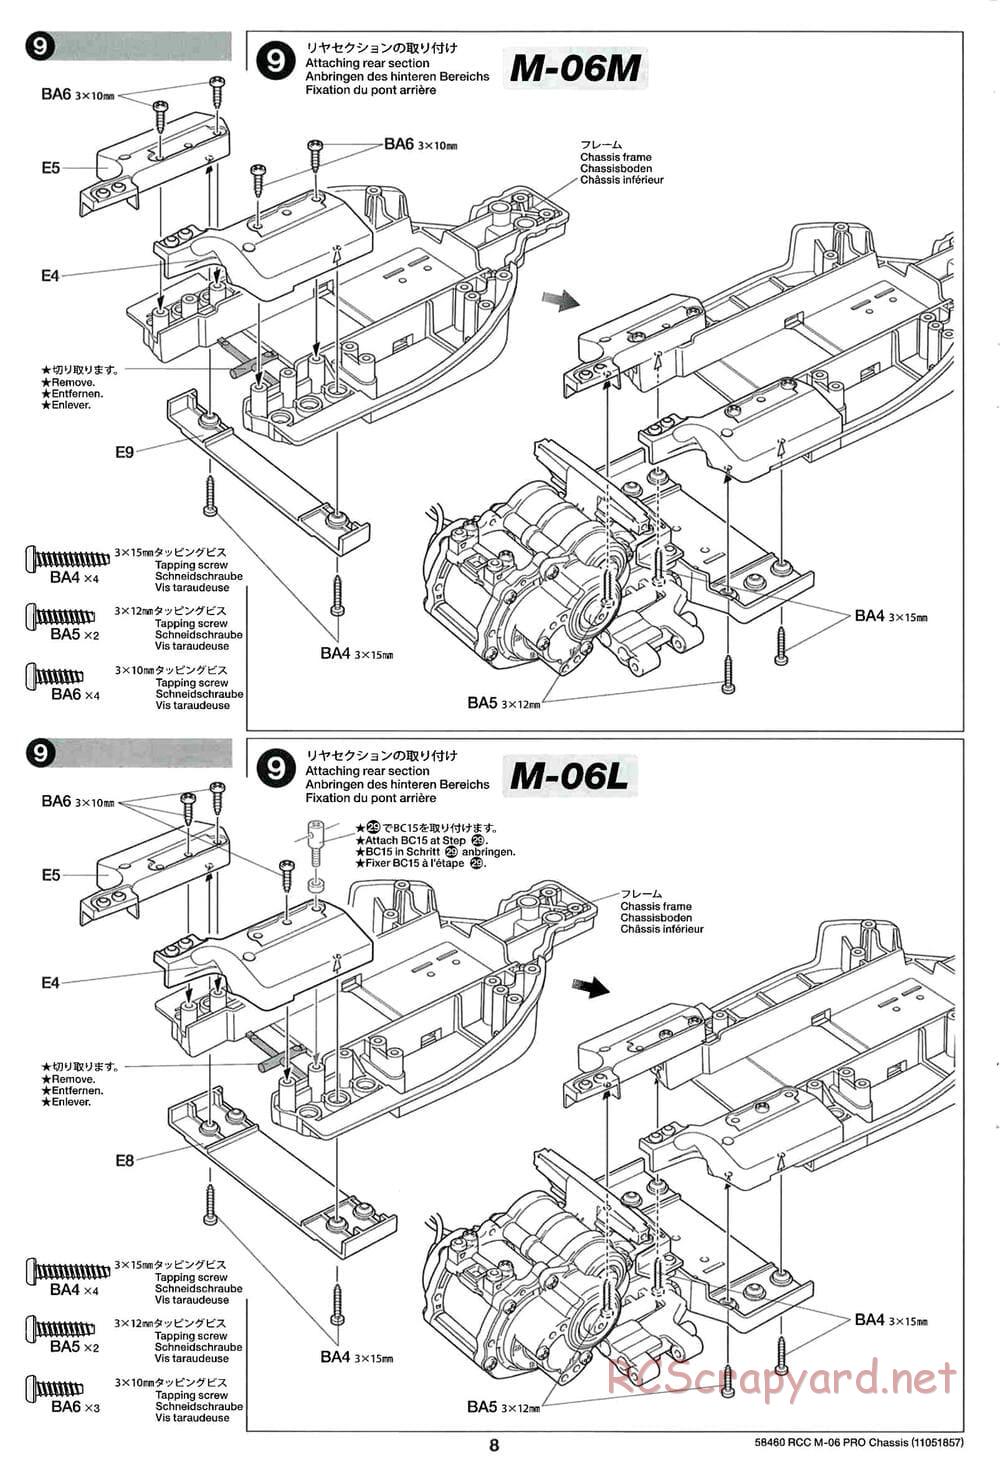 Tamiya - M-06 Pro Chassis - Manual - Page 8